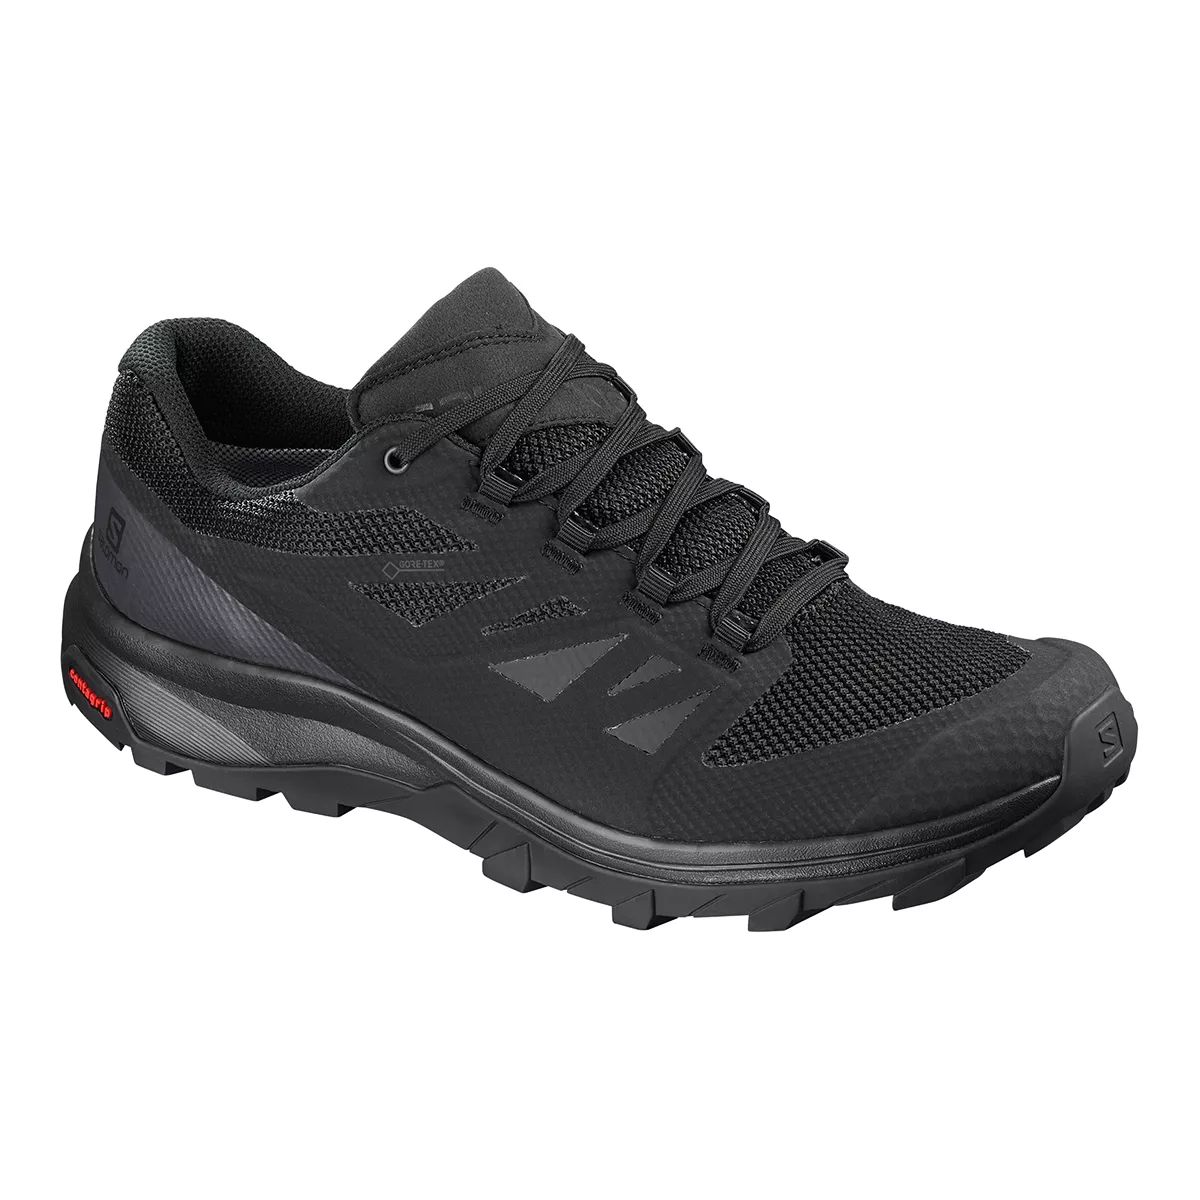 Salomon Men's Outline GTX Hiking Shoes, Gore-Tex, Waterproof, Lightweight